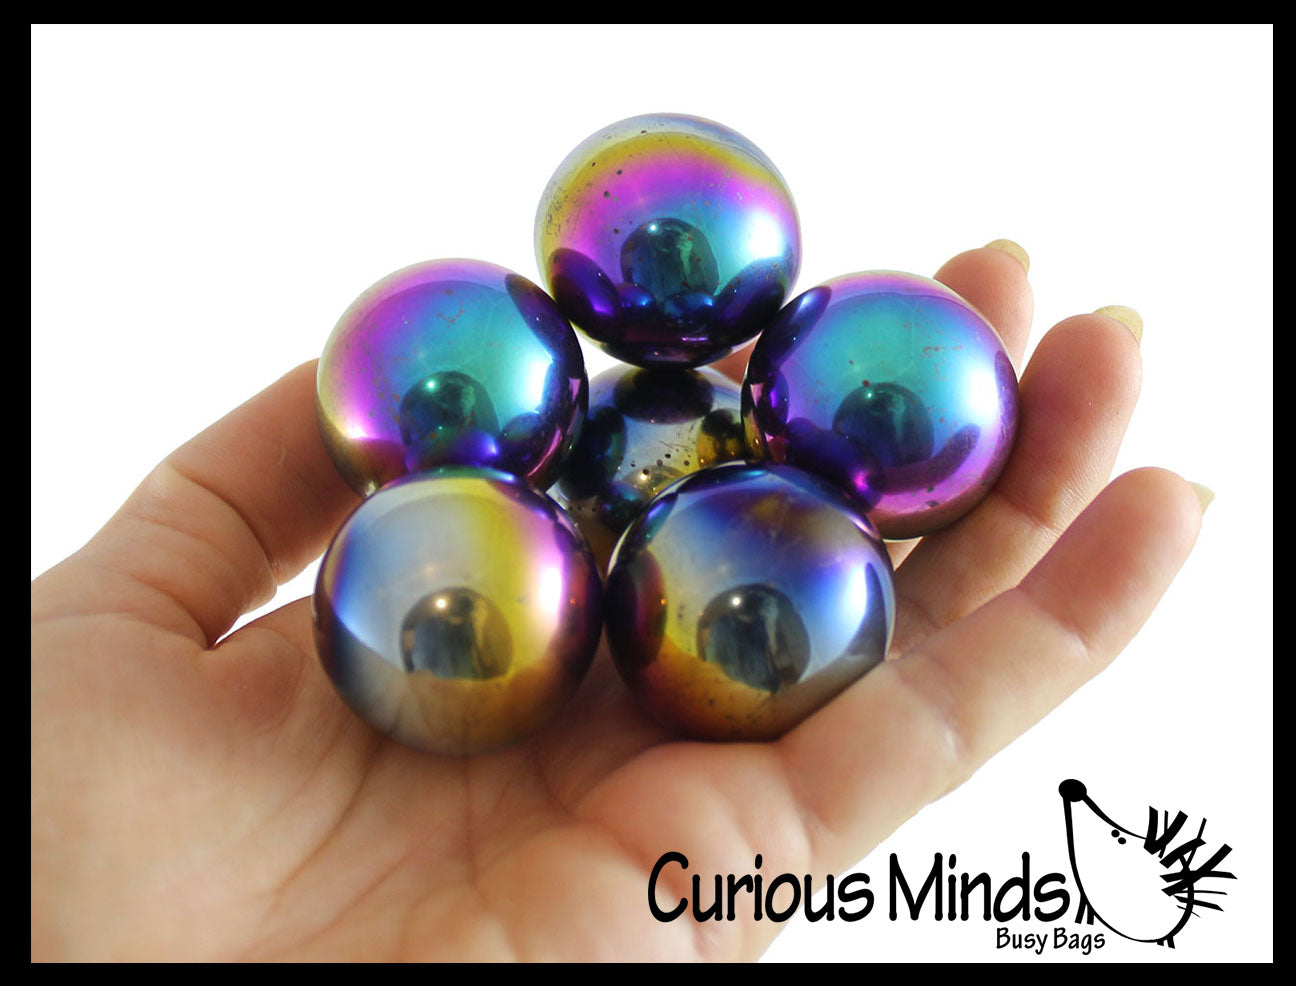 speks magnetic balls – Parkway Presents